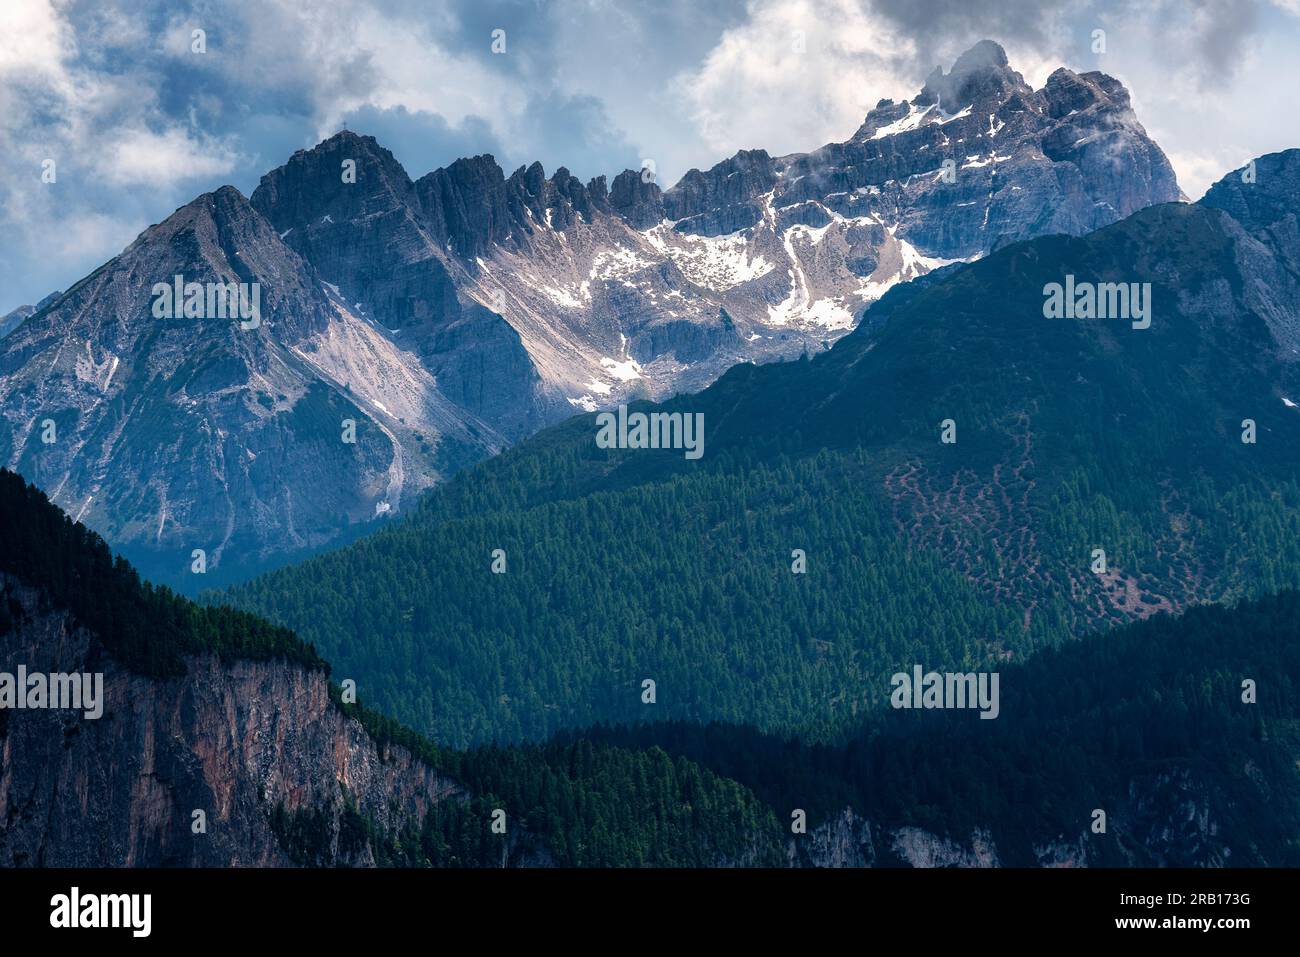 Mountains of the Adamello Brenta park, Europe, Italy, Trentino South Tyrol, Sporminore, Trento province Stock Photo